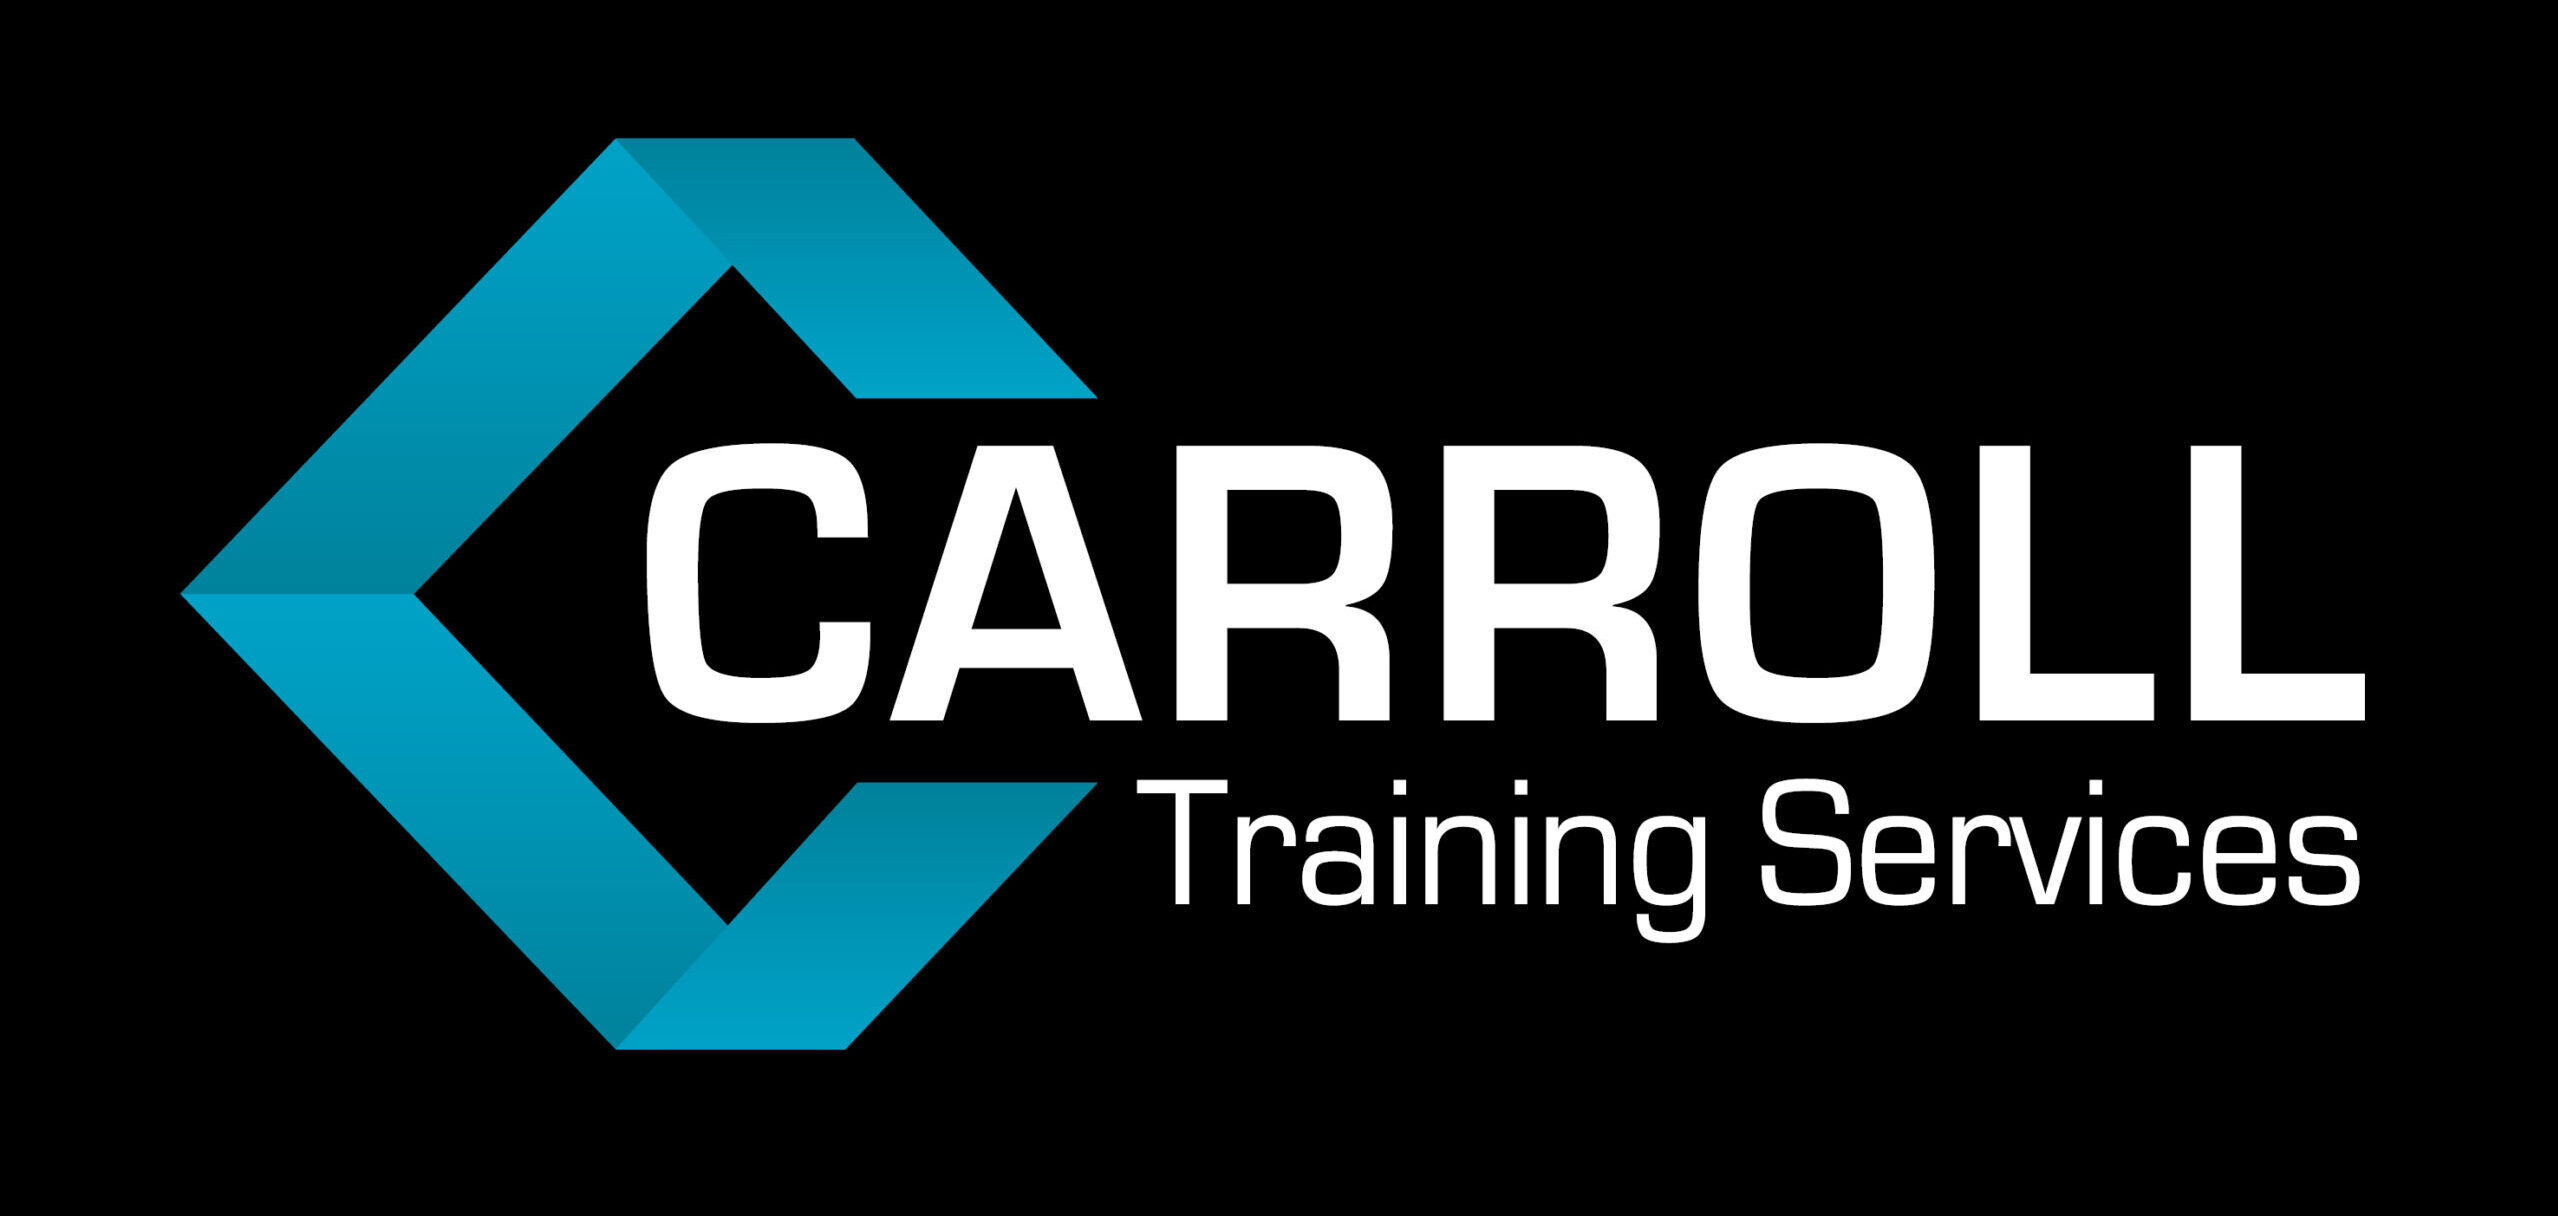 Carroll Training Services